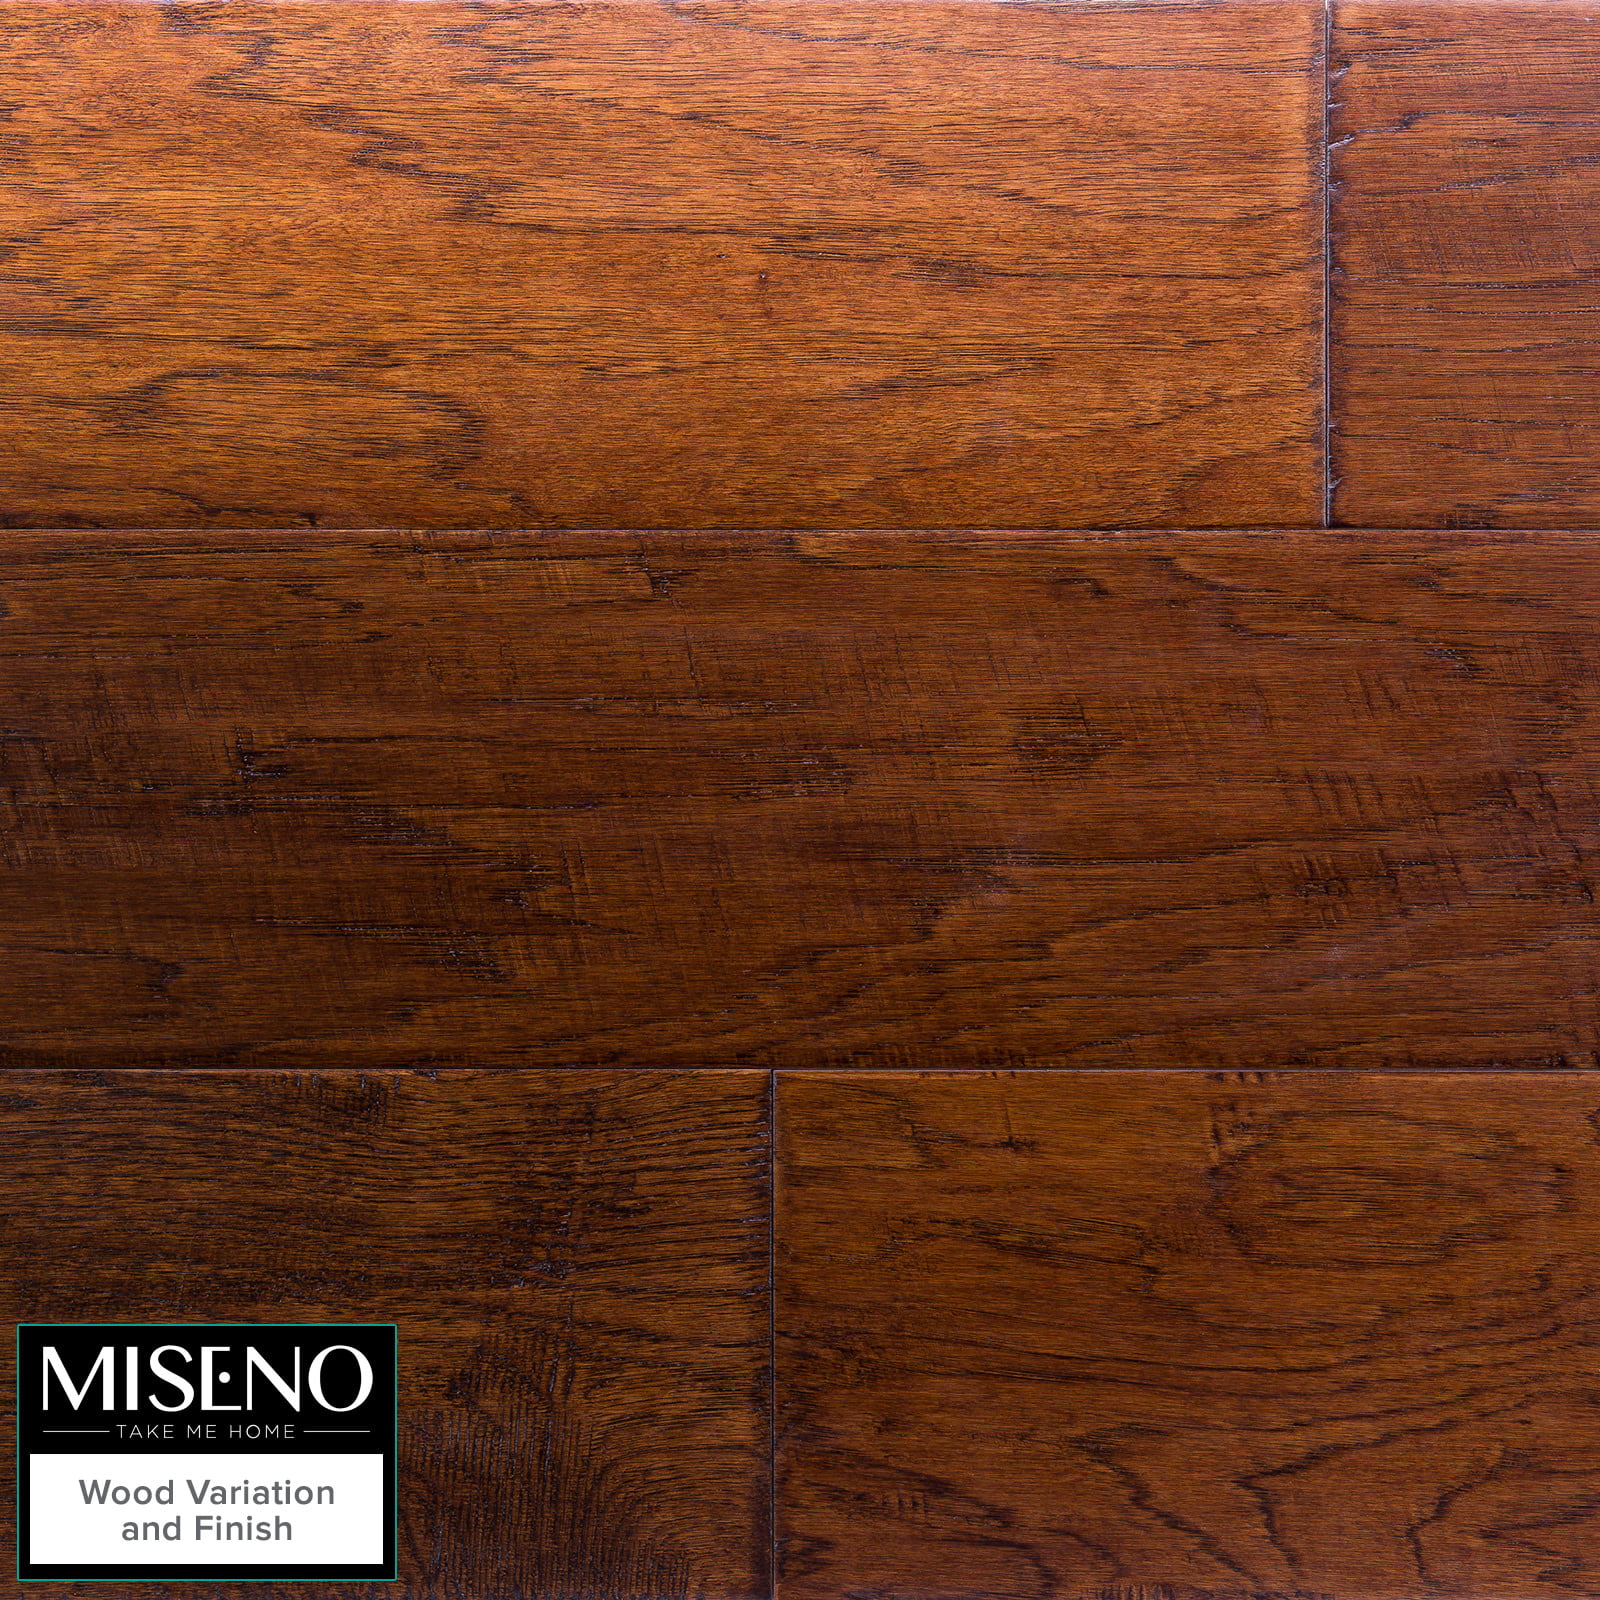 Miseno Mflr Yorktown E Revolution, Miseno Hardwood Flooring